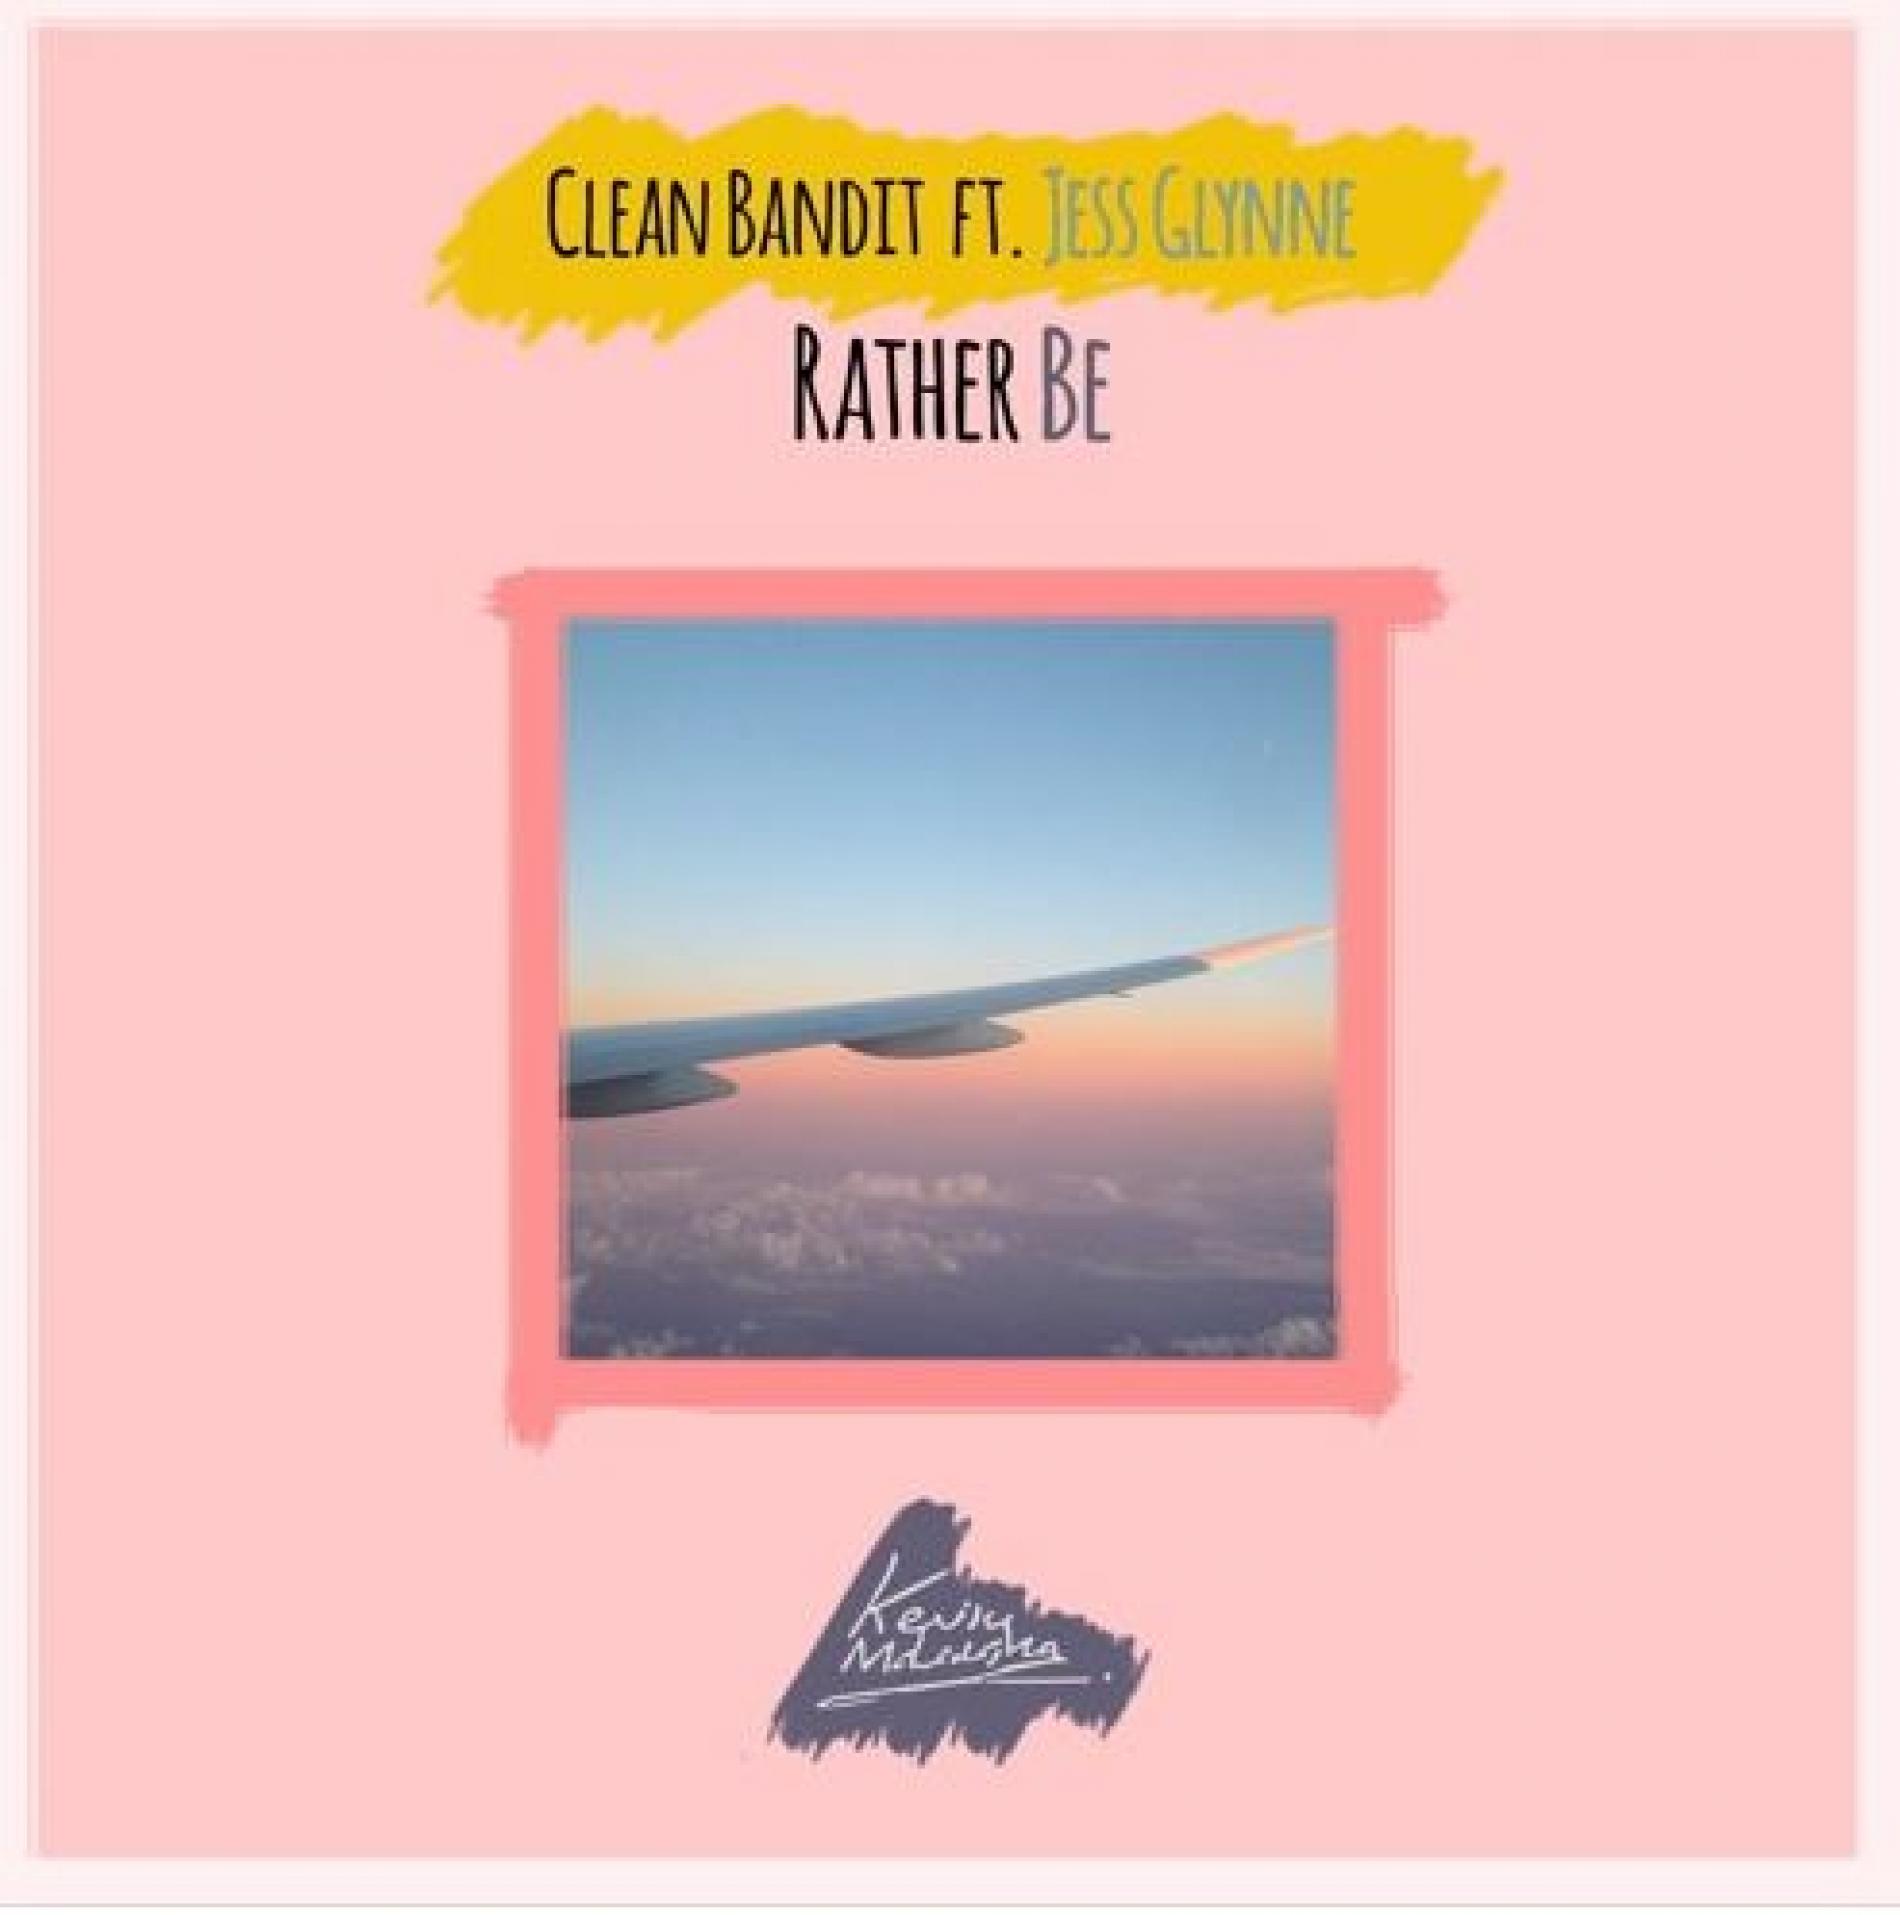 Clean Bandit ft Jess Glynne – Rather Be (Kevin Maleesha Remix)